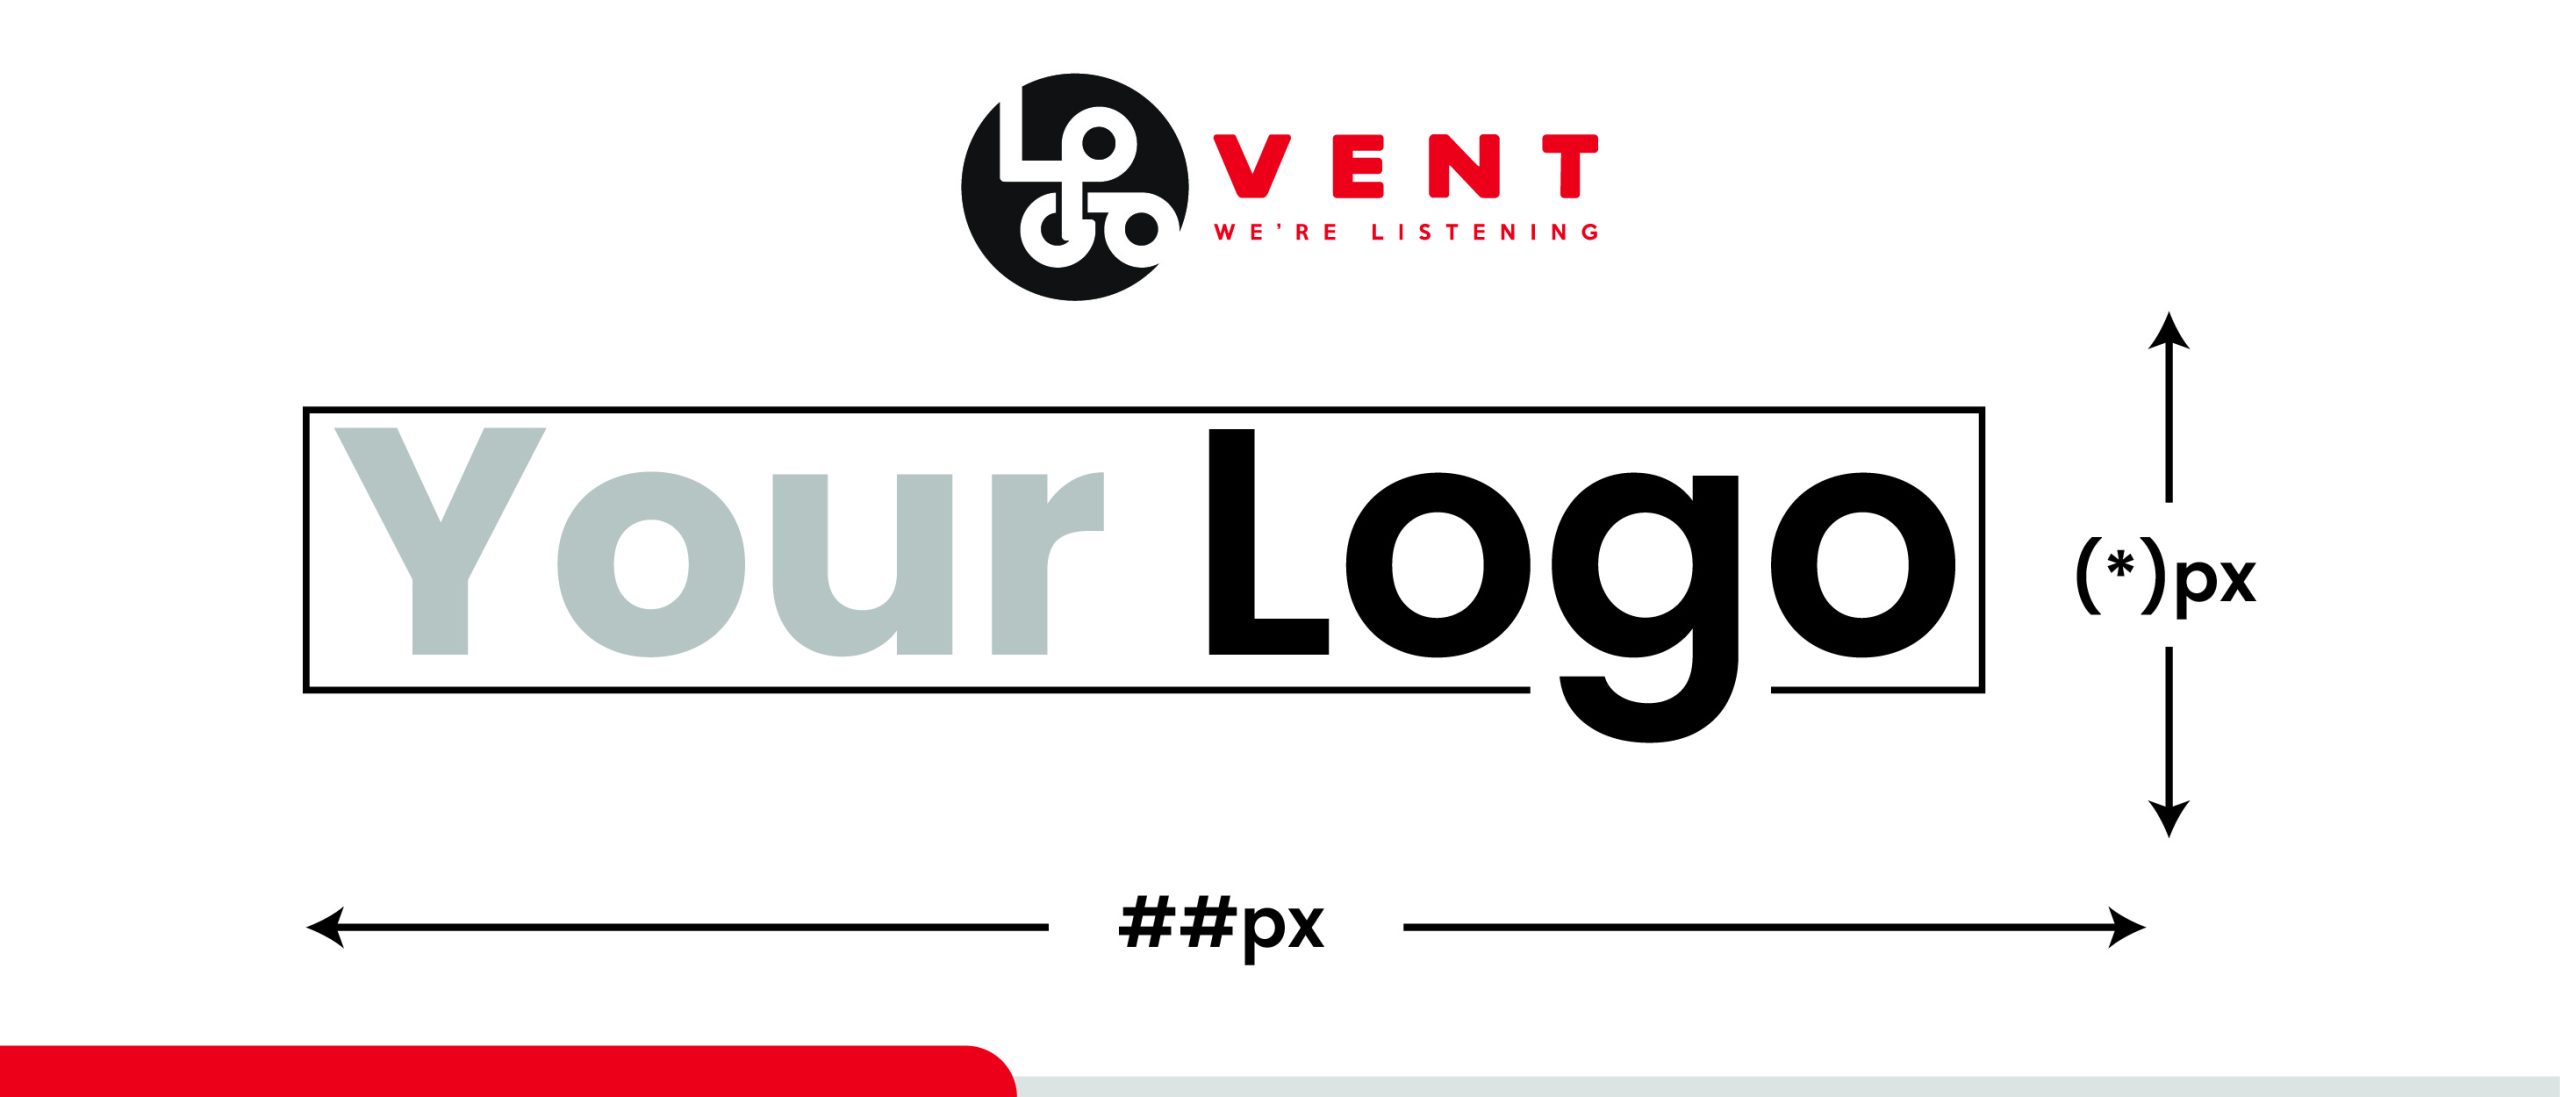 373 Px logo design Vector Images | Depositphotos